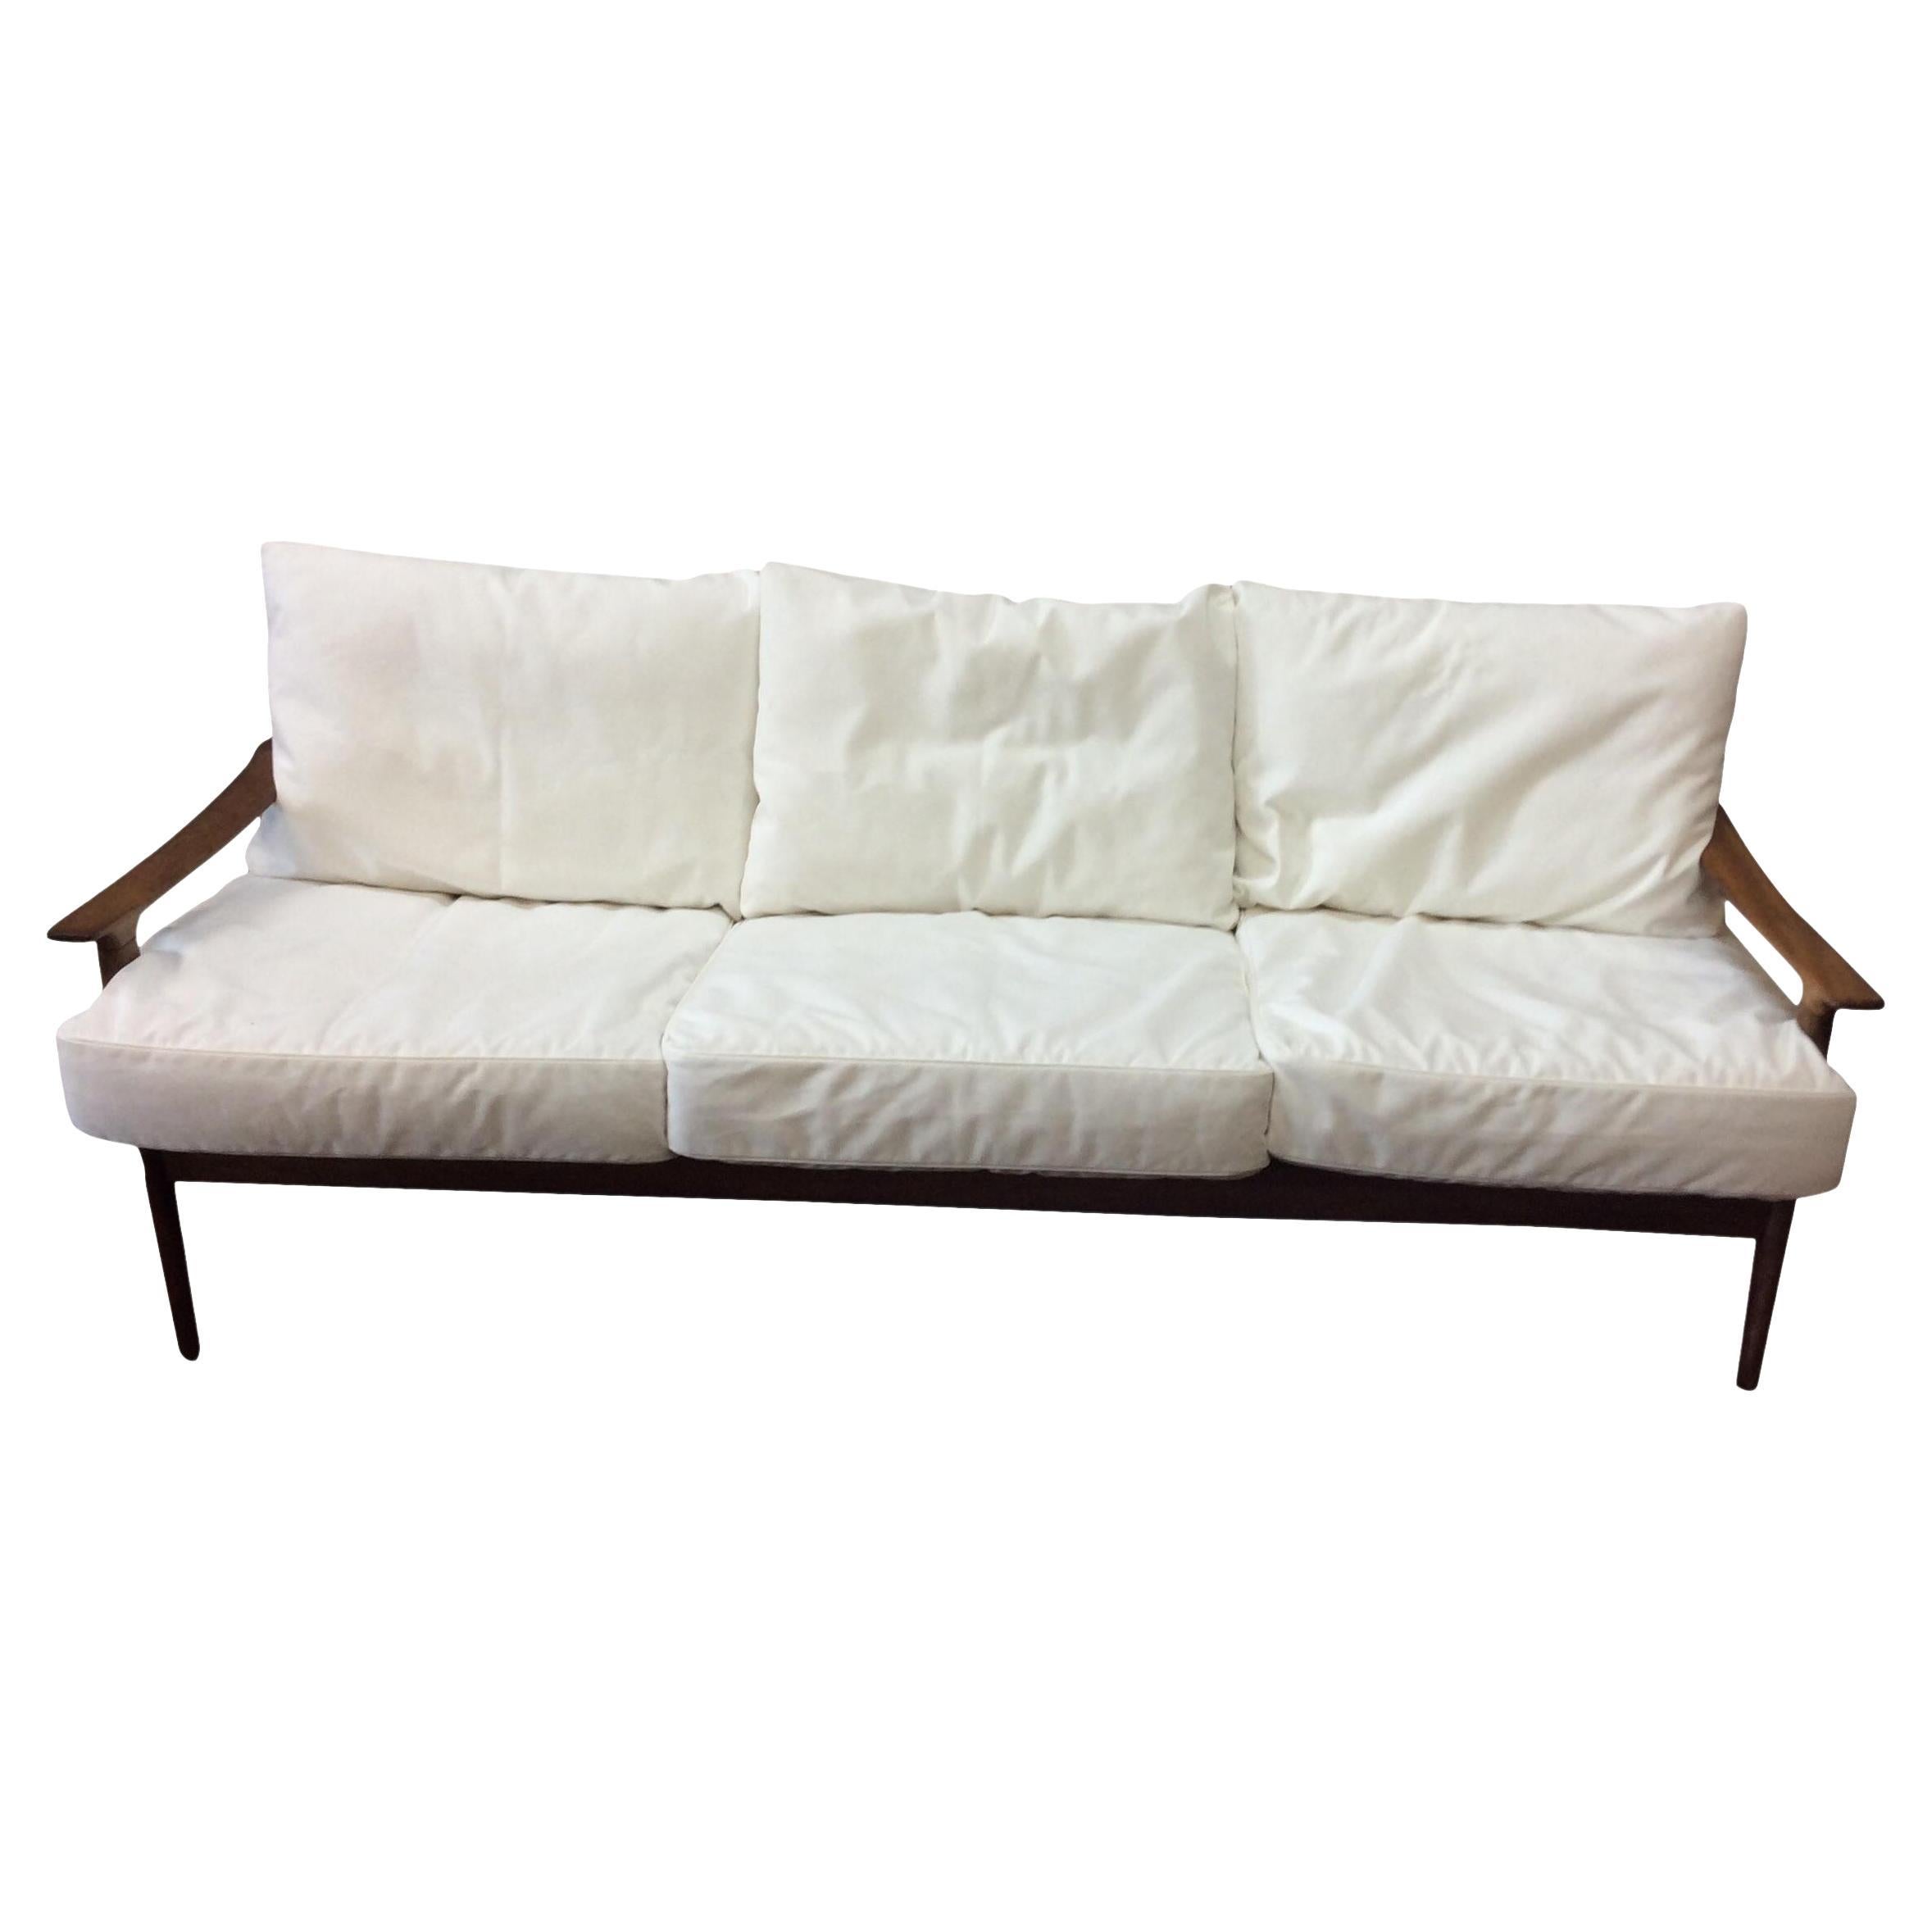 1960s Mid-Century Modern Scandinavian Design Sofa For Sale